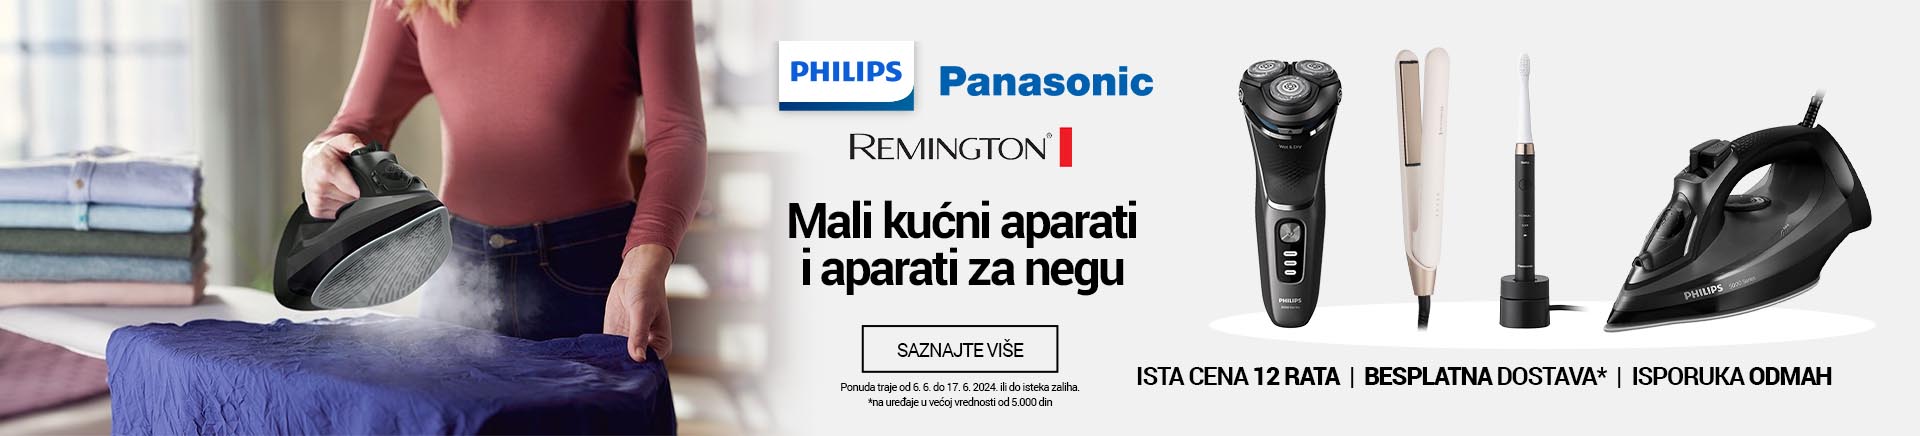 RS Philips Remington Panasonic MKA AZONJ MOBILE 760x872.jpg